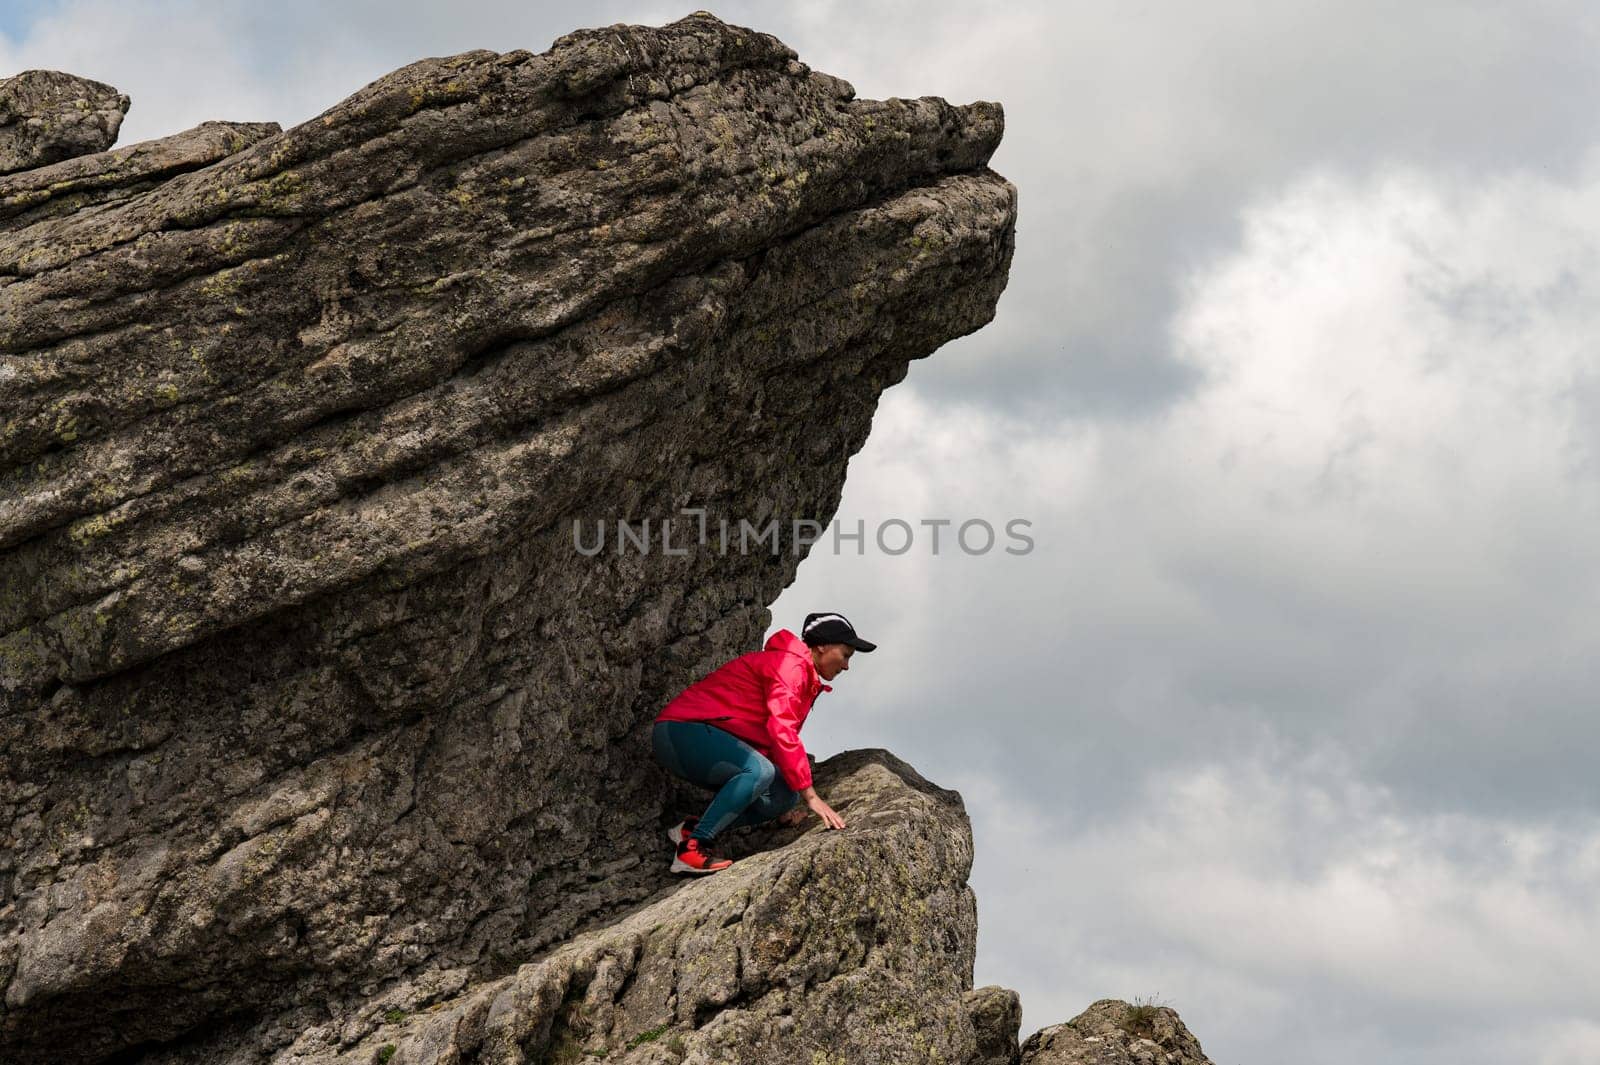 A woman climber climbed high on a dangerous rock.